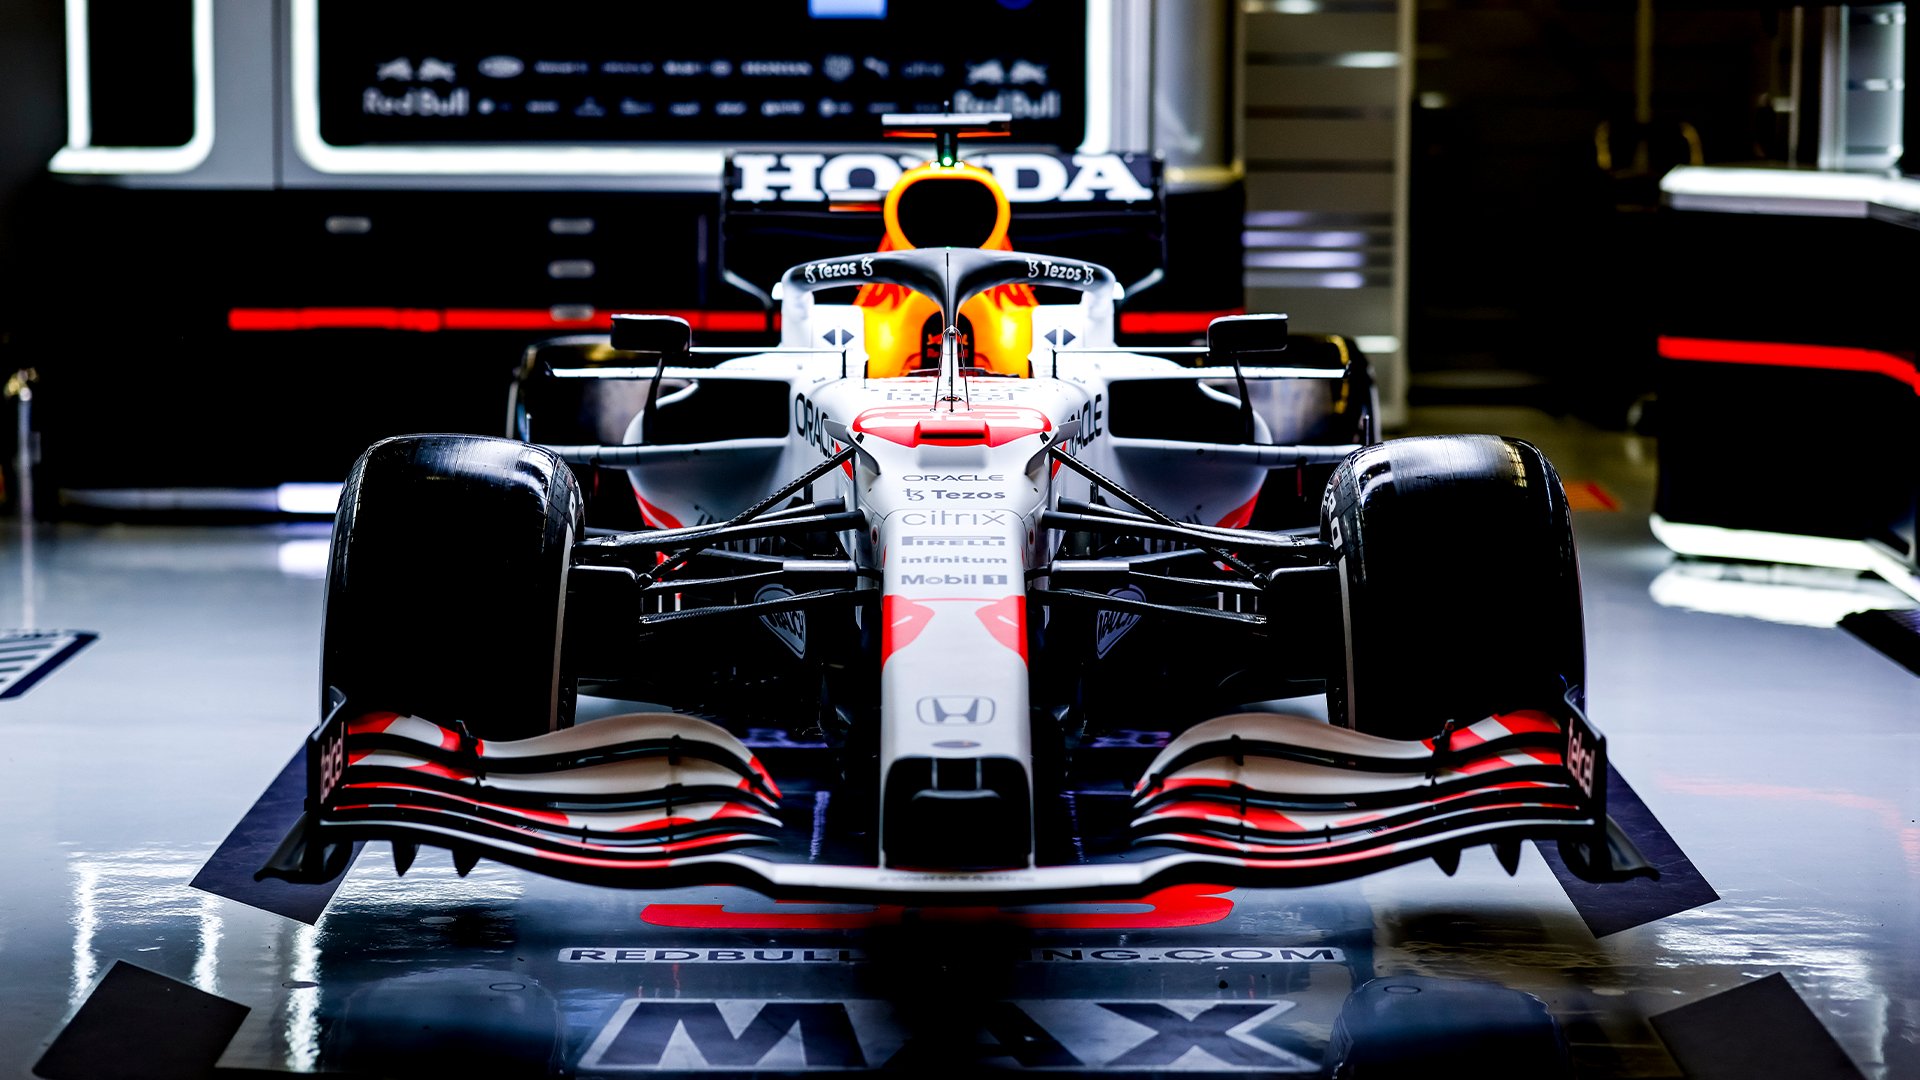 Photos) Red Bull Honda share new livery ahead of Turkish GP 2021